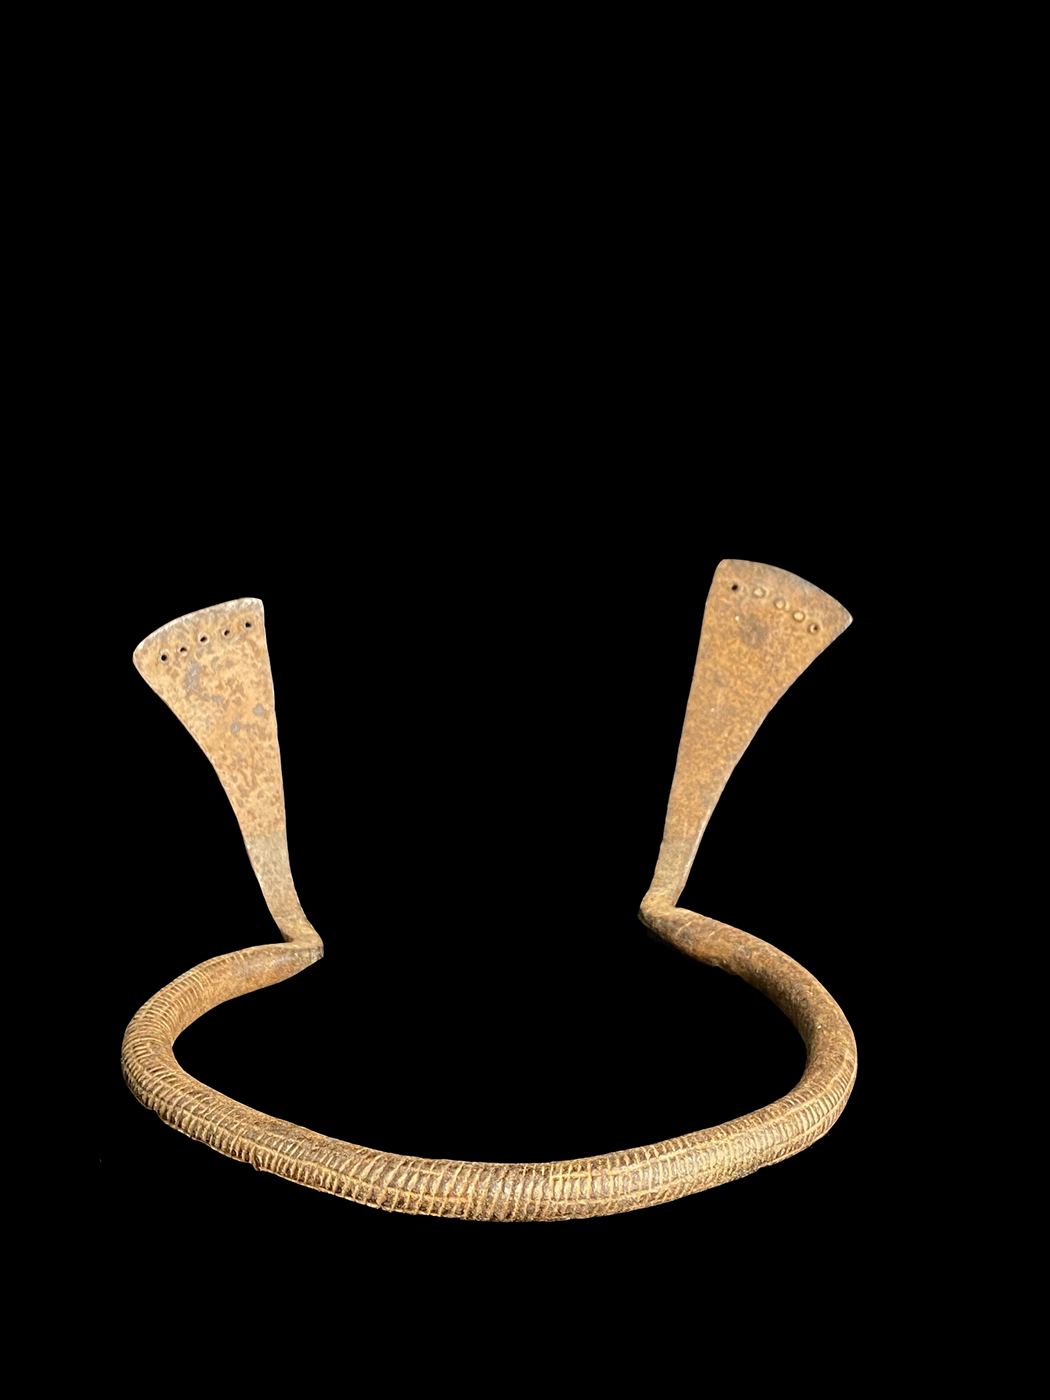 Prestige Neck Ring (Bousouli) - Fali and Tupuri People, Northern Cameroon/Nigeria/Chad - Sold